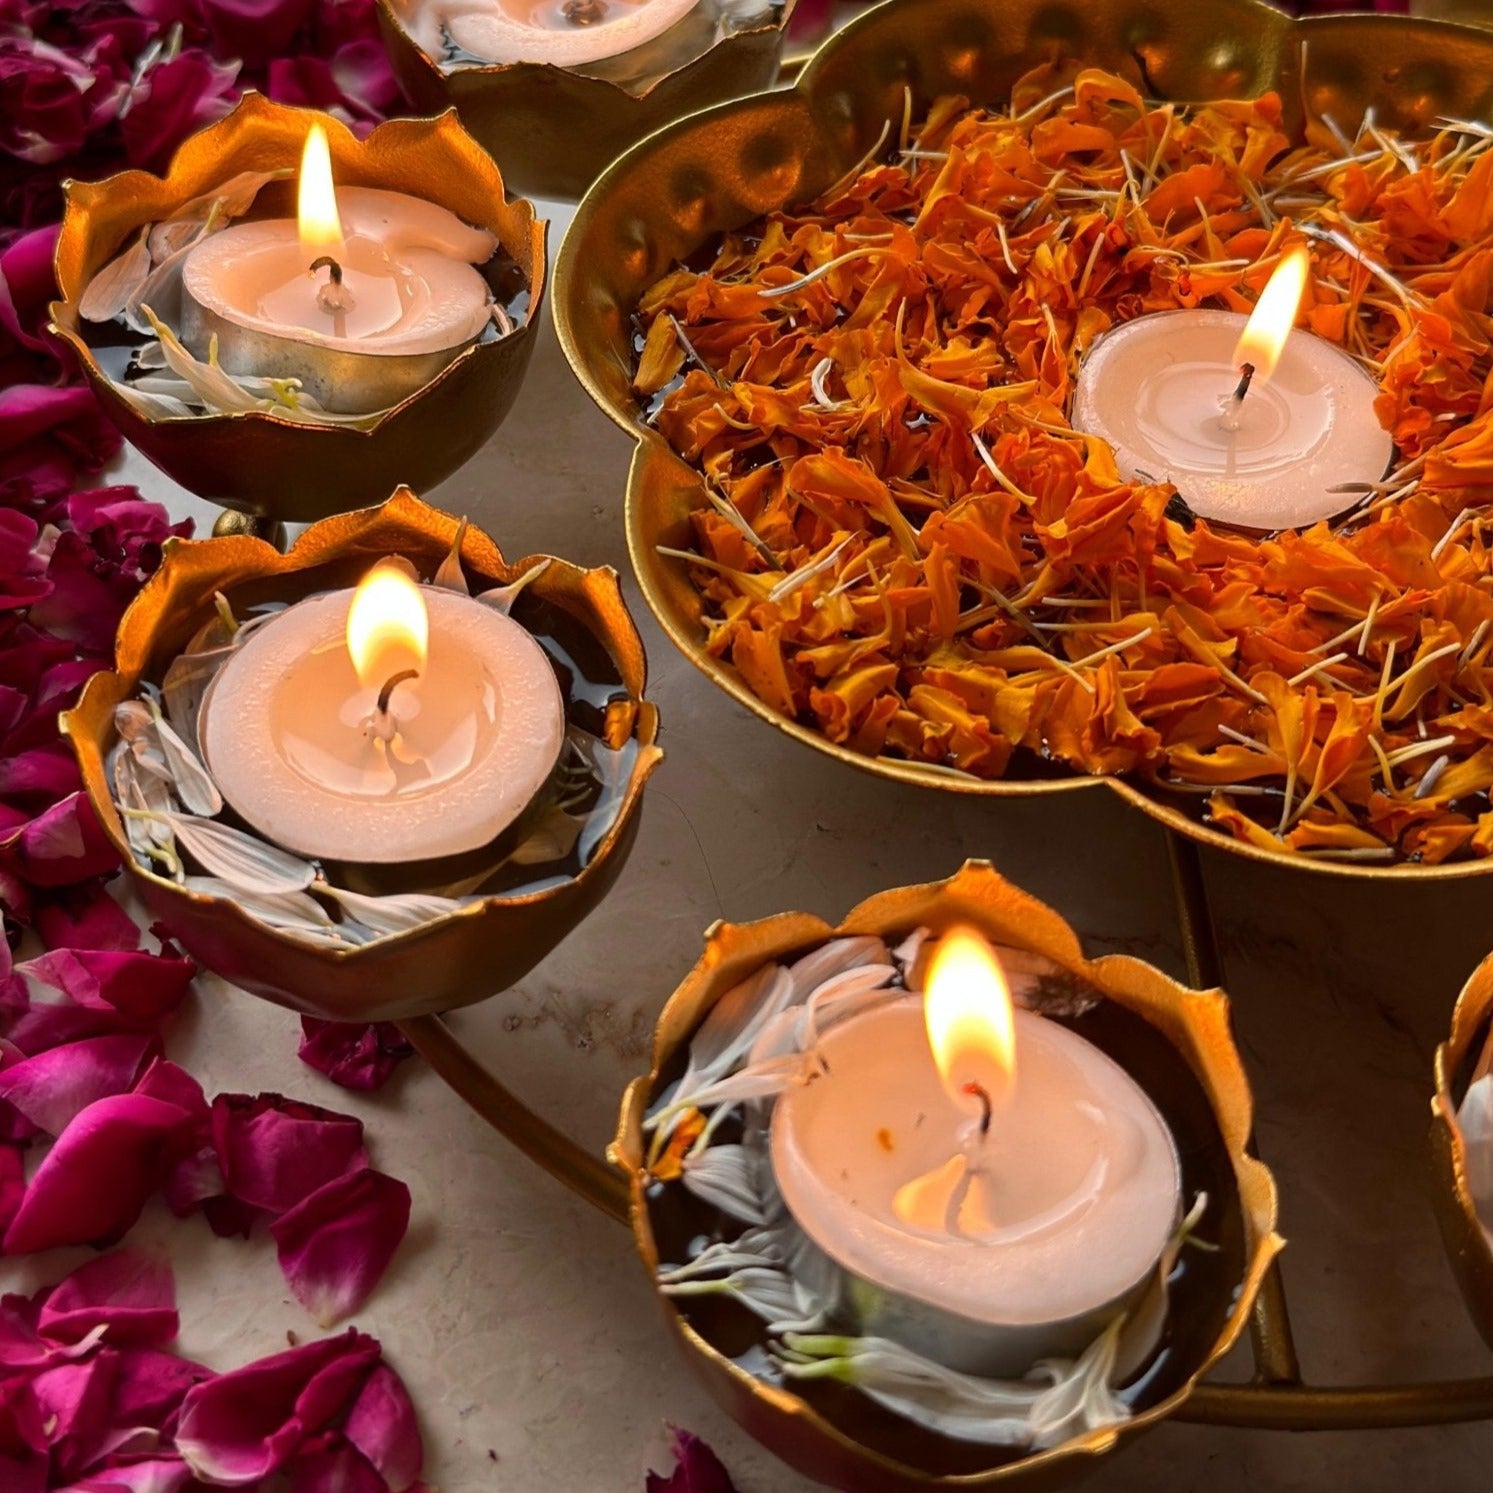 Metal Urli - Floral Decorative - Nurture India